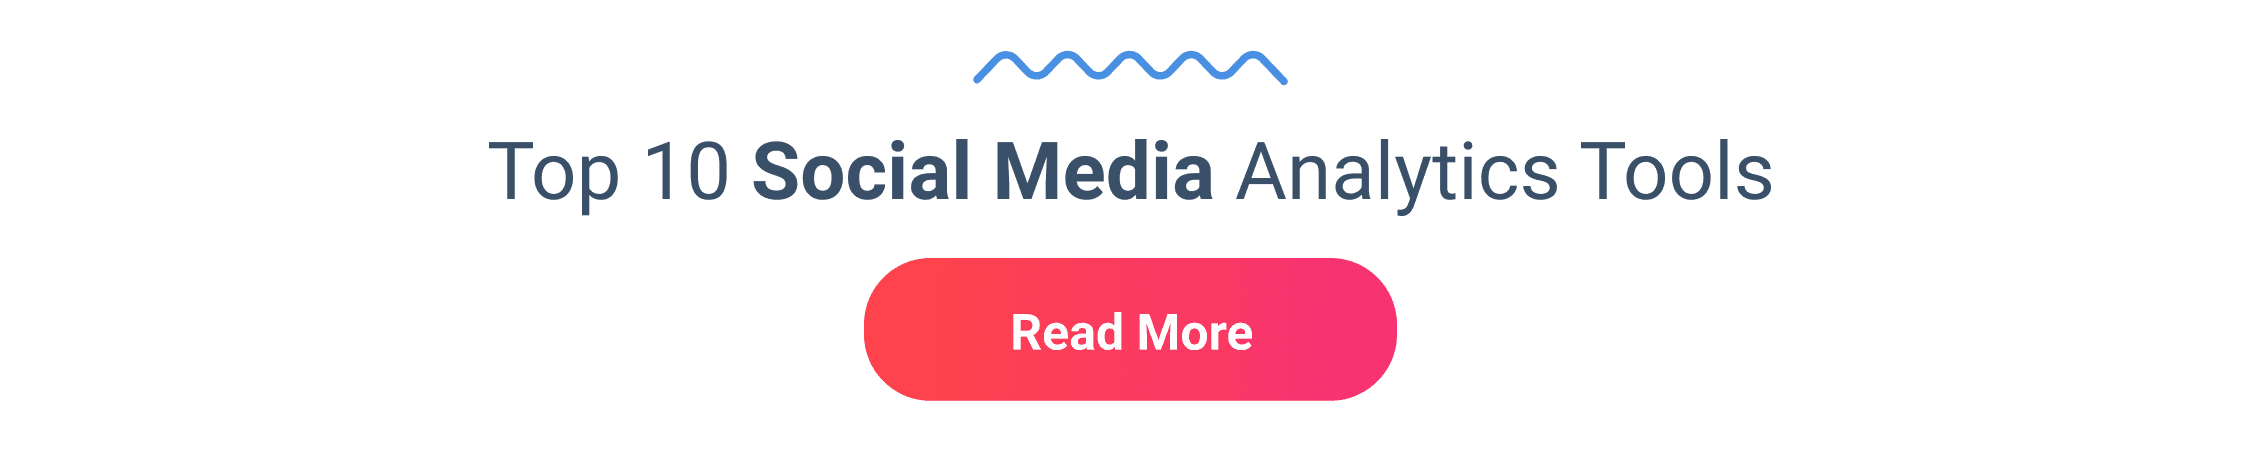 Top 10 social media analytics tools banner